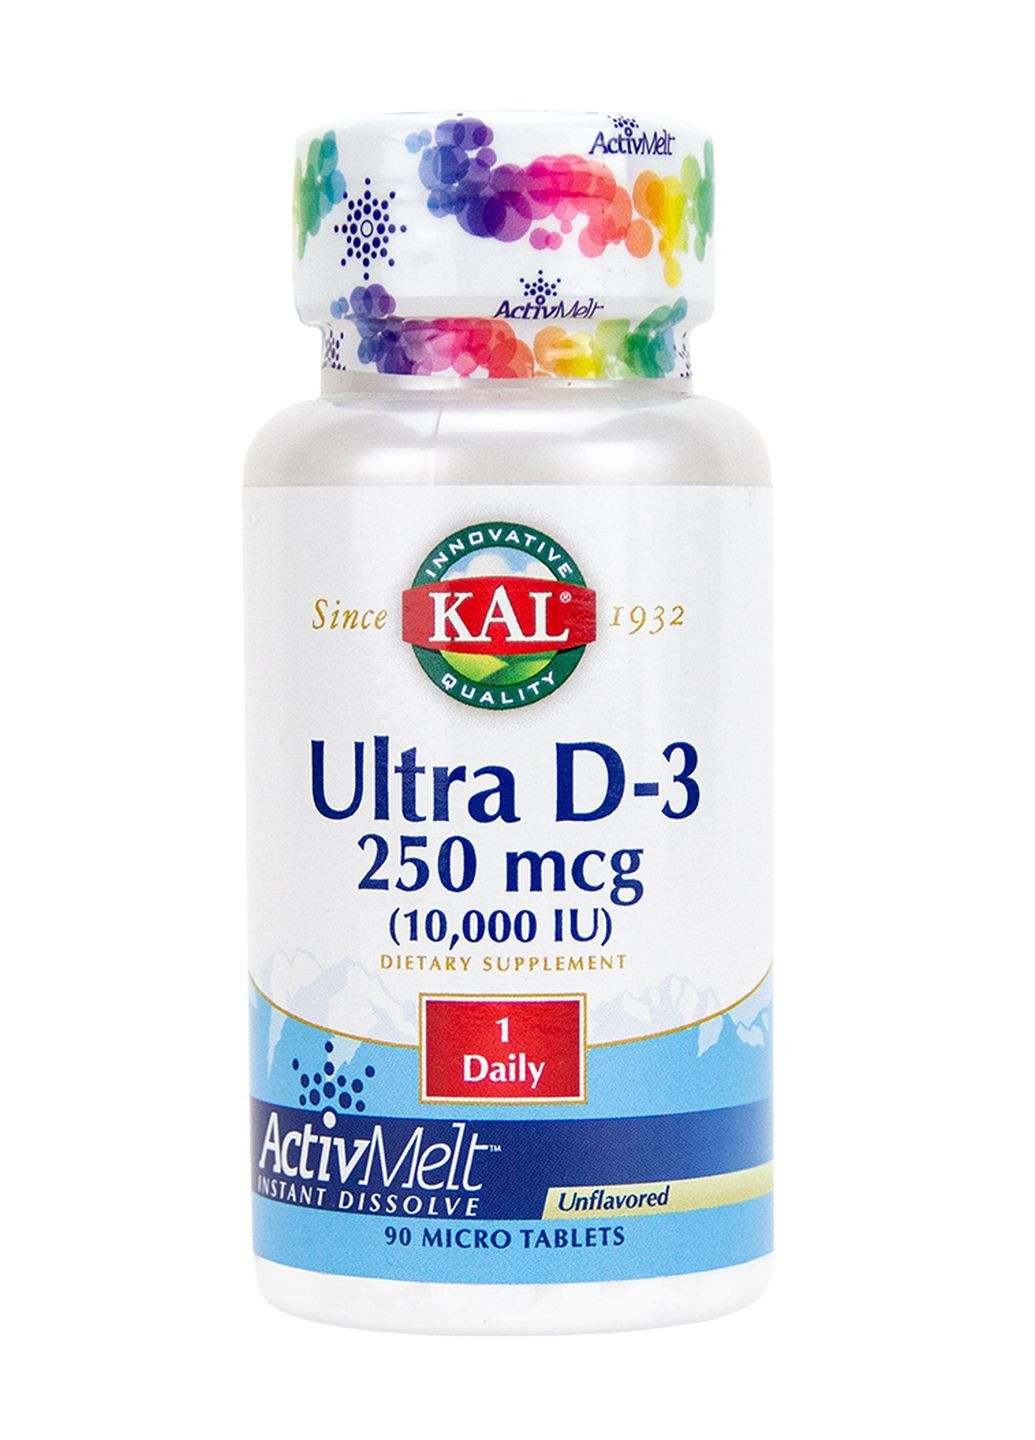 Вітамін D3 Ultra D-3, 250 mcg (10,000 IU), 90 Softgels KAL (260265644)